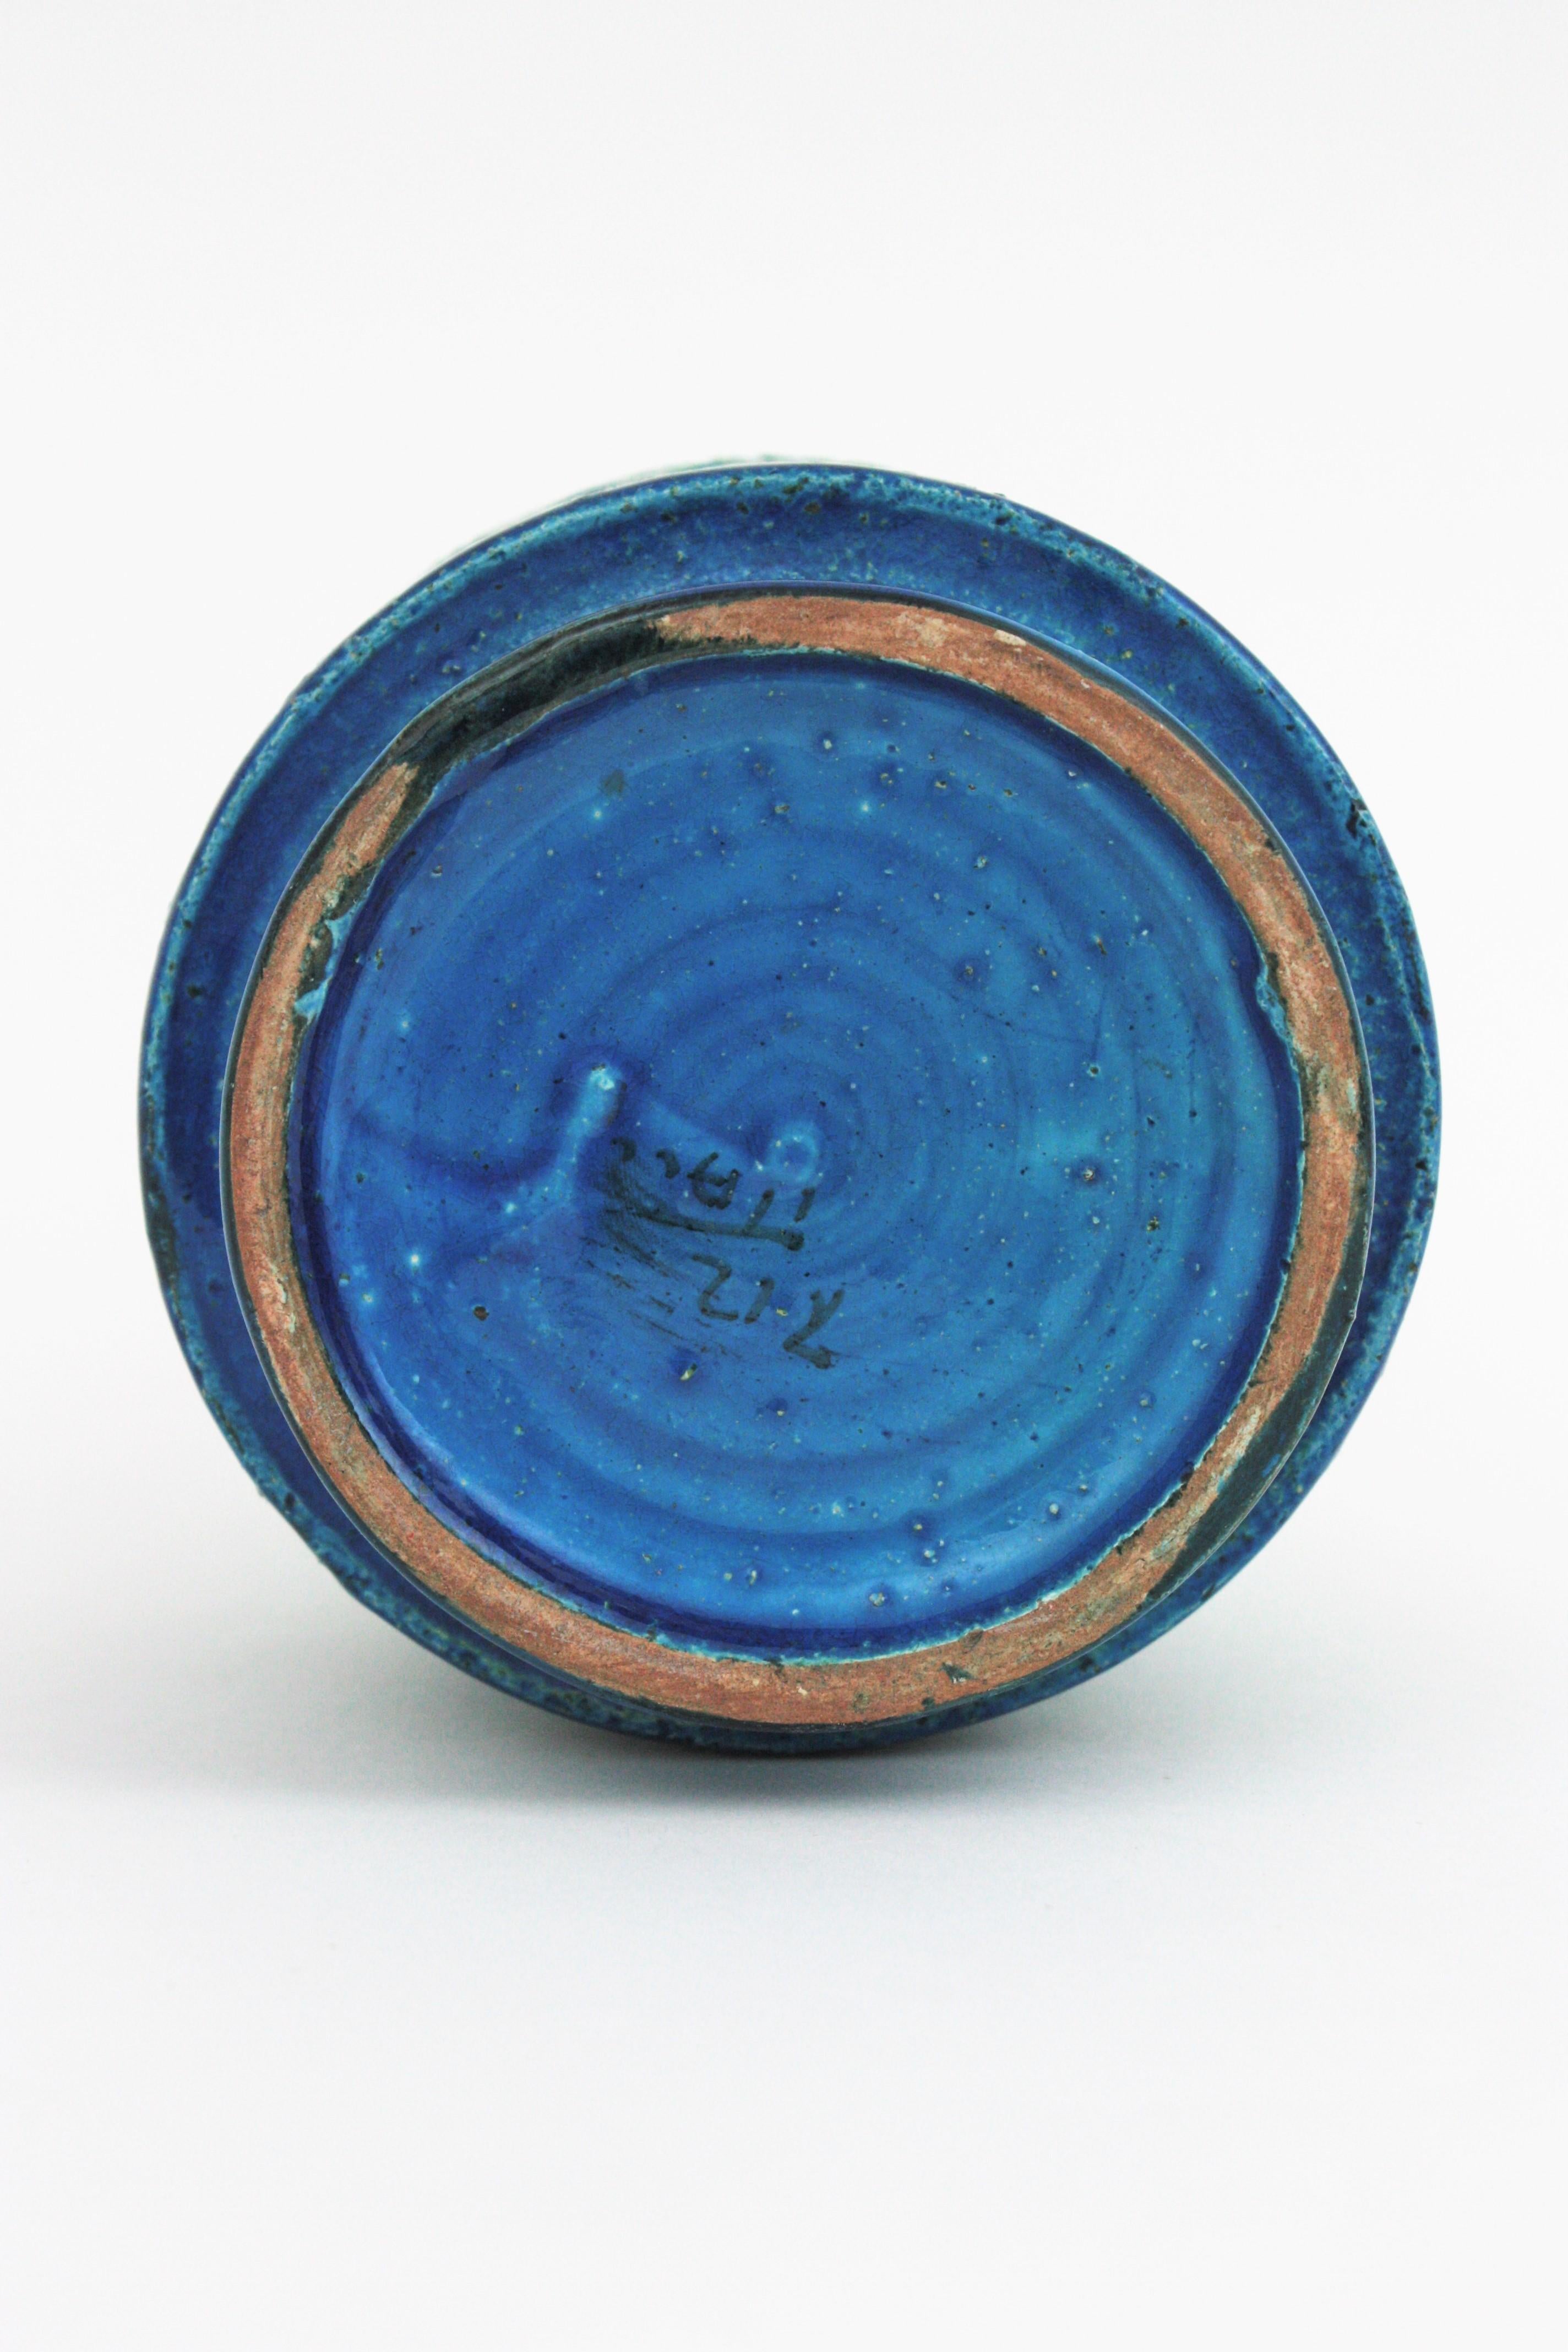 Bitossi Aldo Londi Rimini Blue Ceramic Vase 6